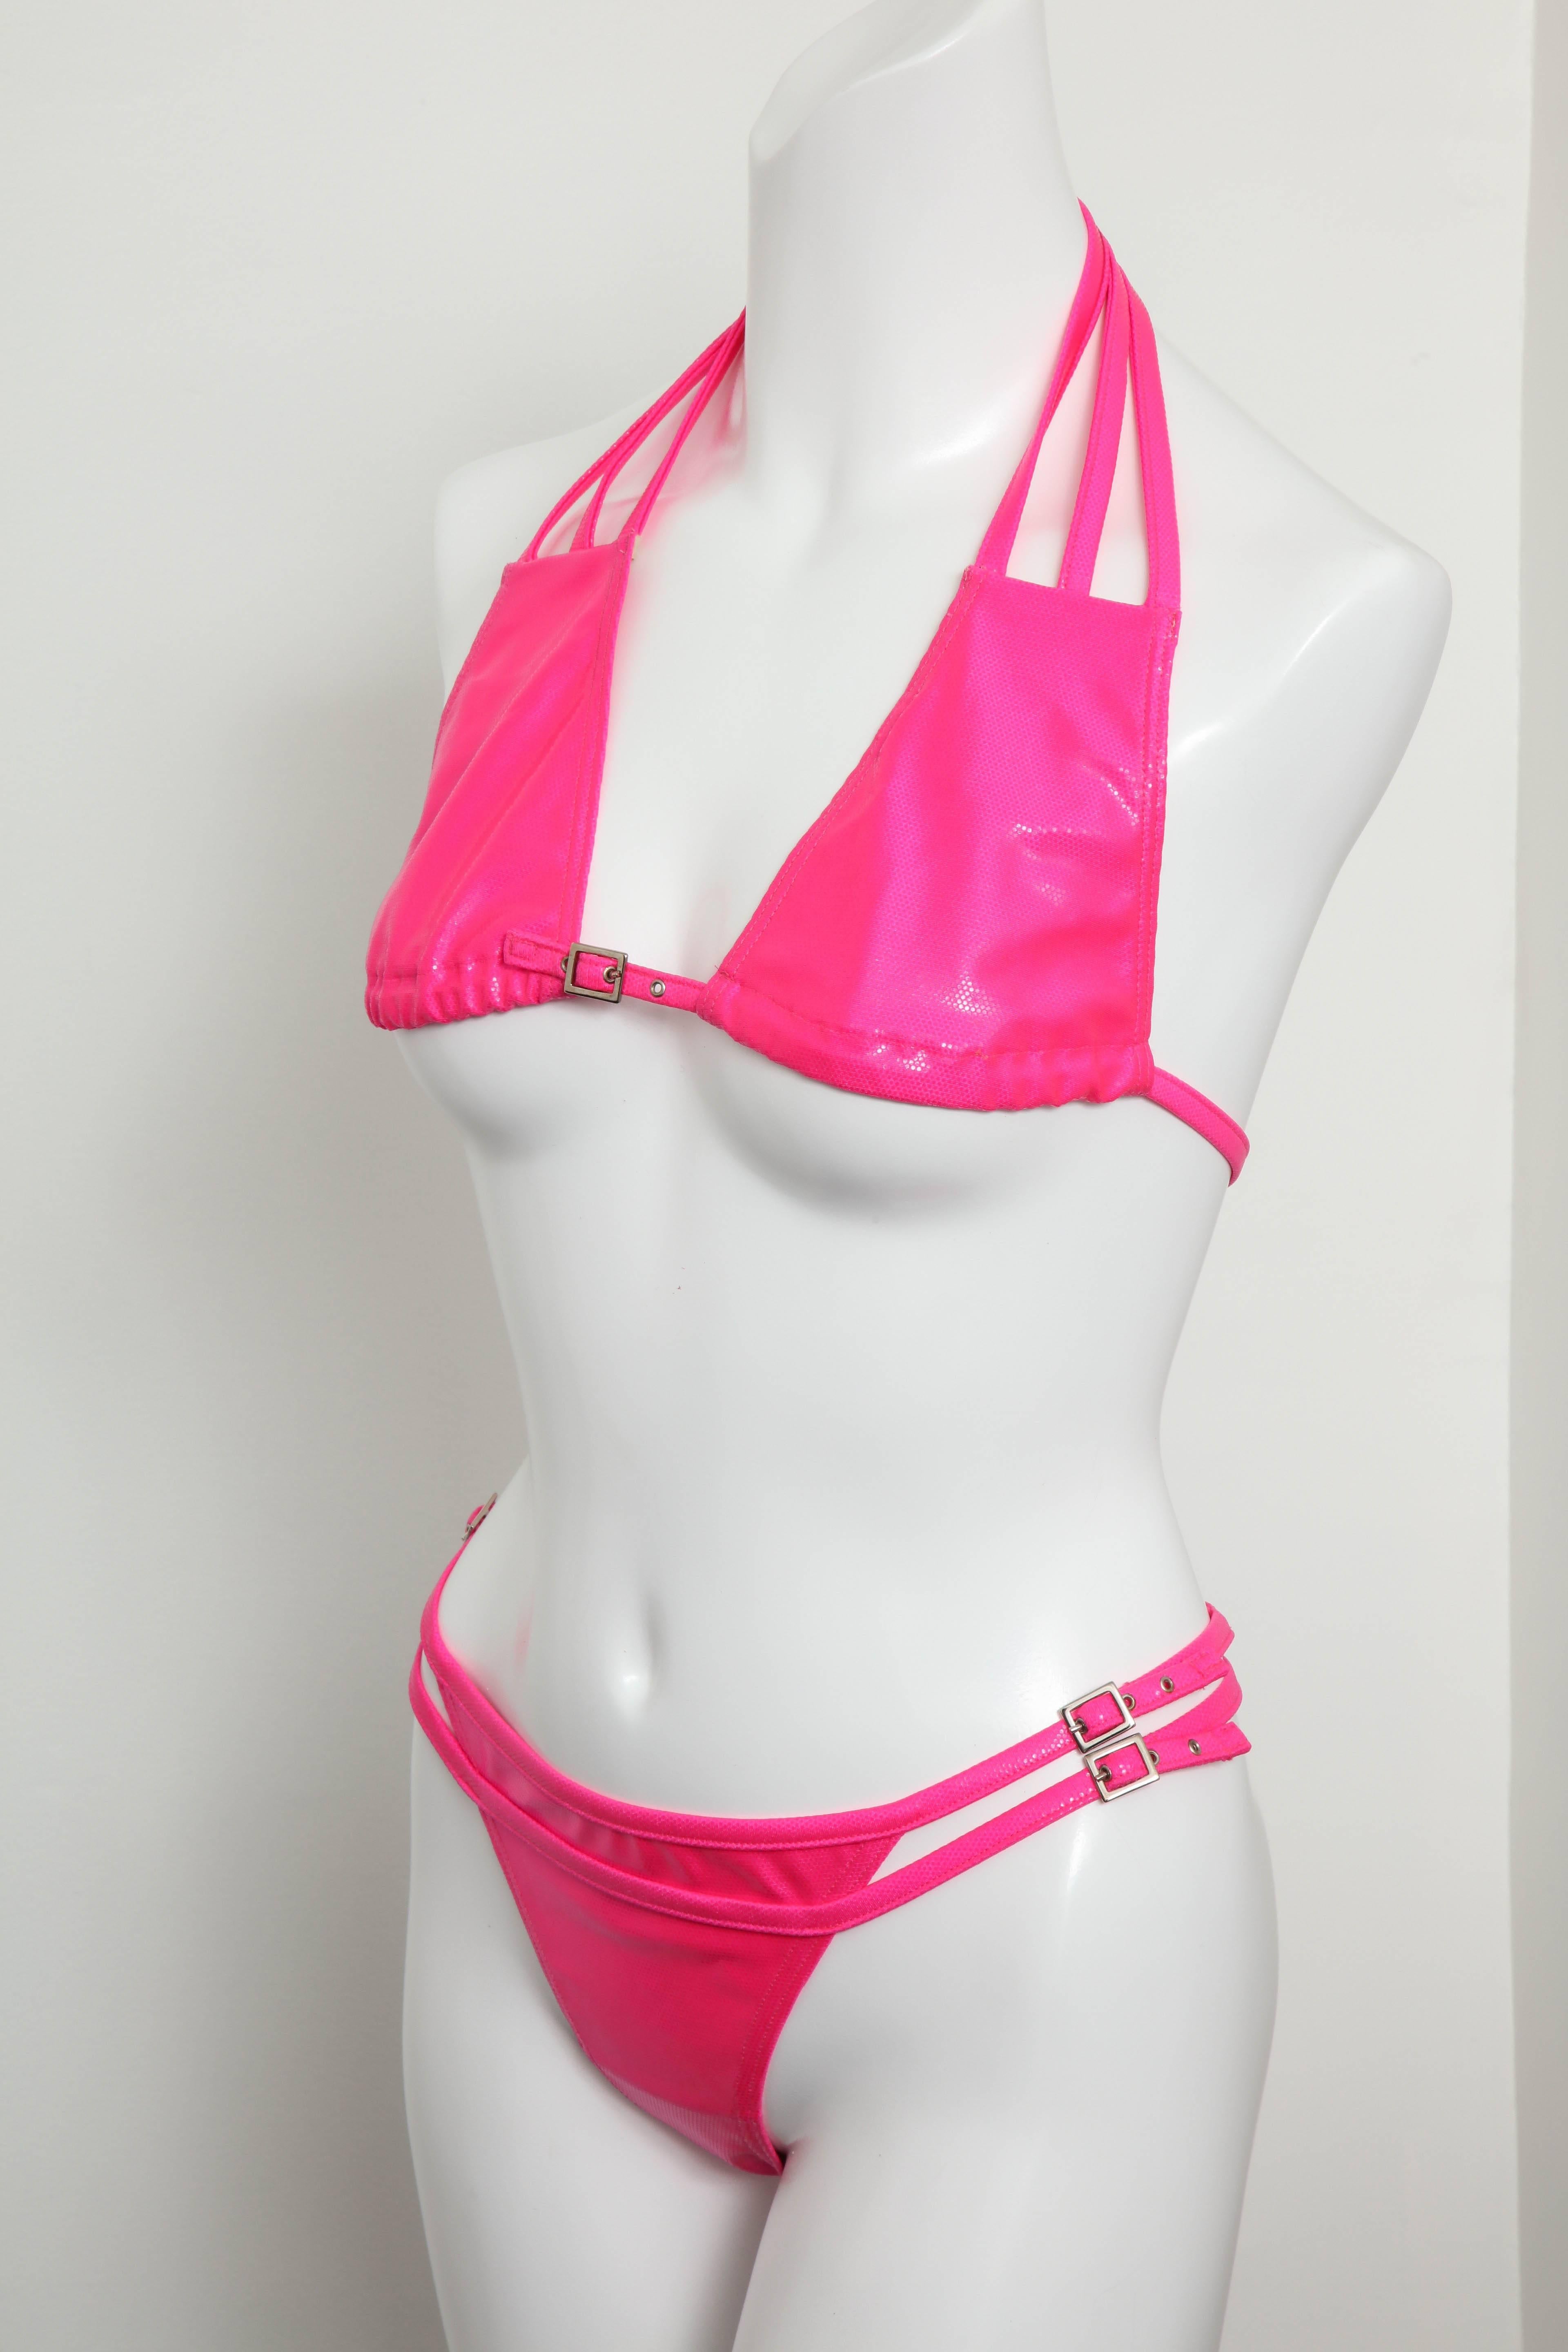 Women's John Galliano for Christian Dior Pink Bikini For Sale